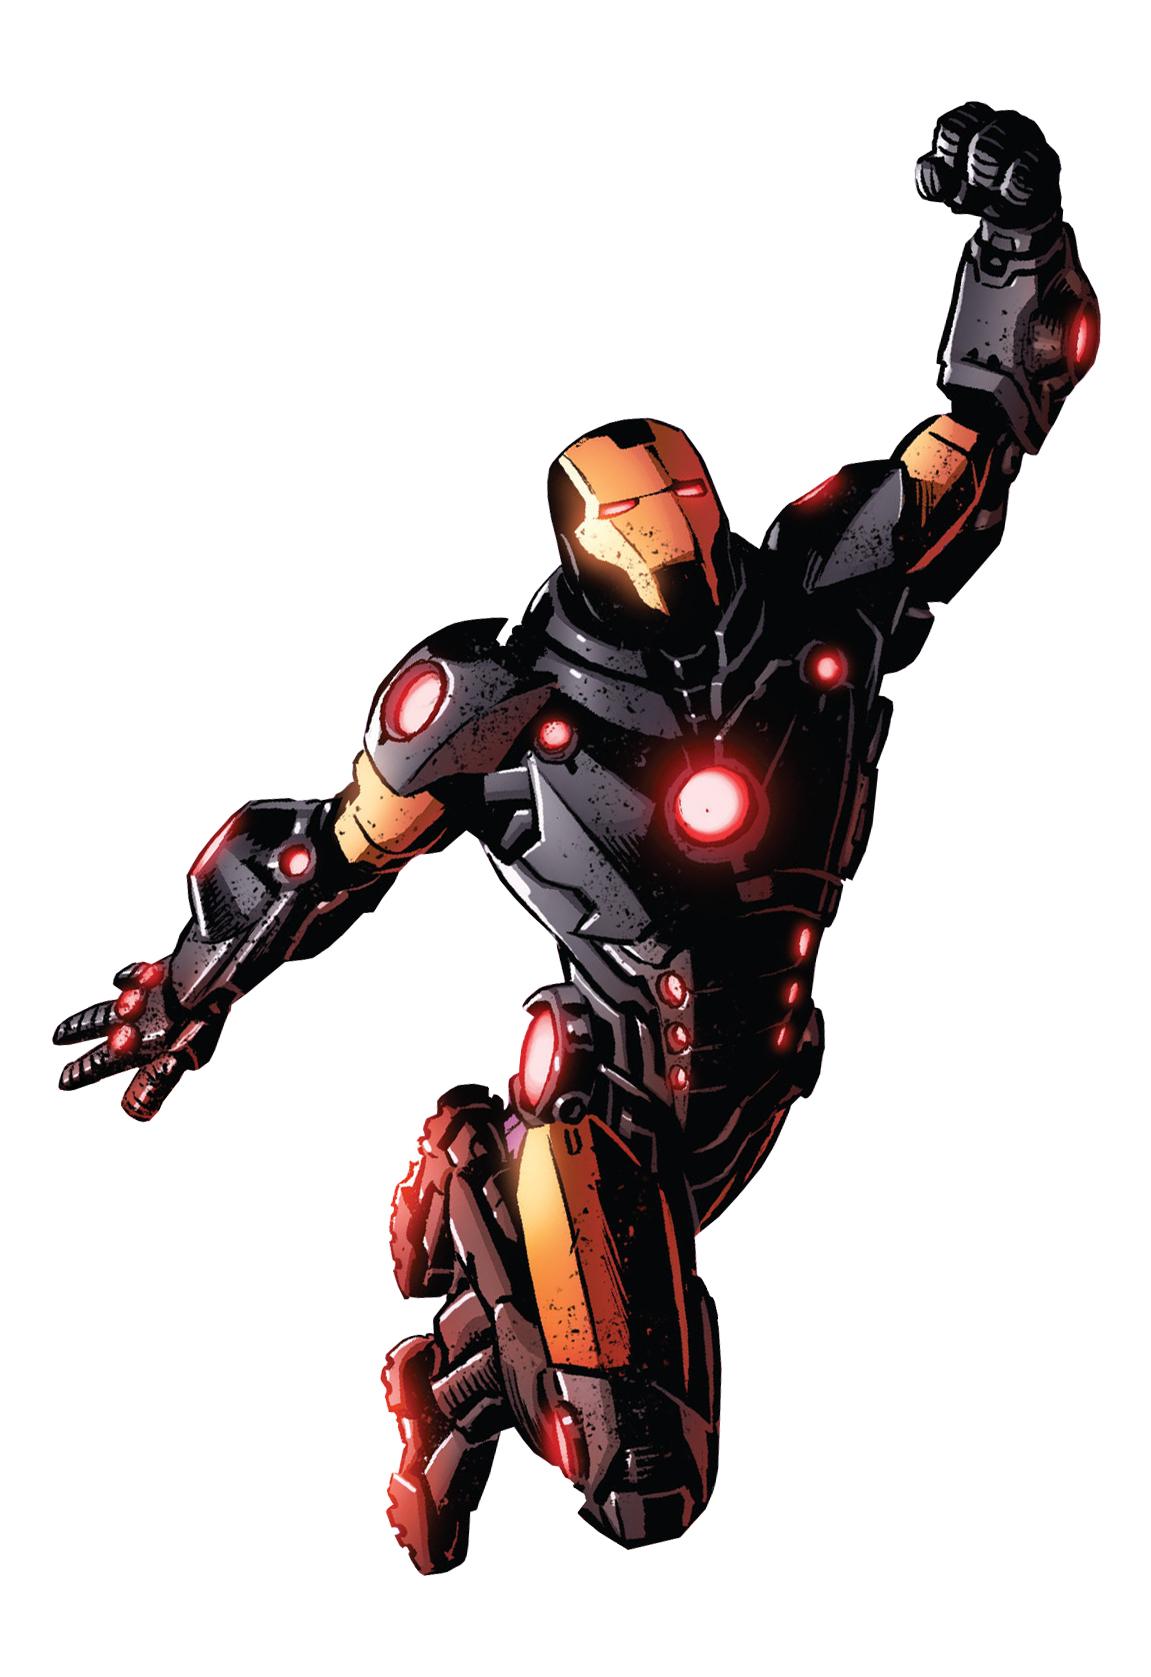 Iron Man Image